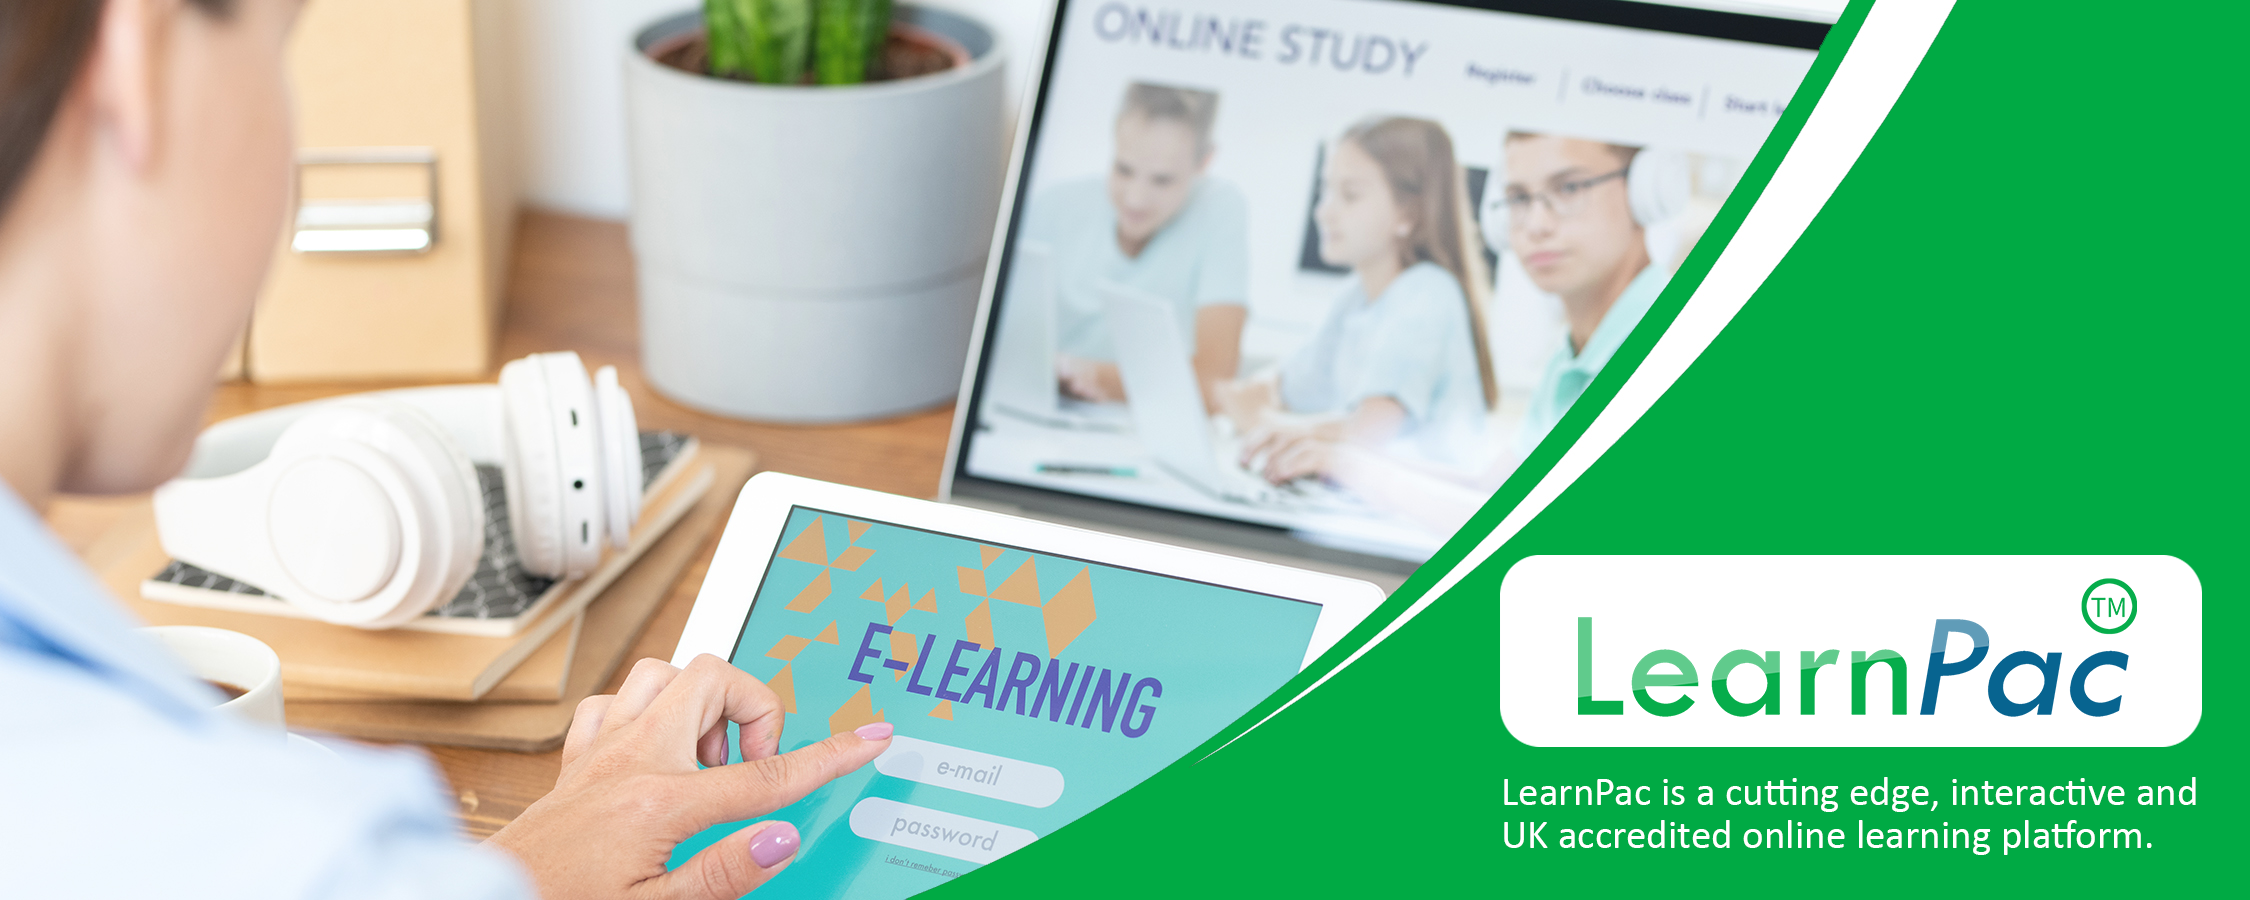 Mandatory Training for Dentists - Online Learning Courses - E-Learning Courses - LearnPac Systems UK -